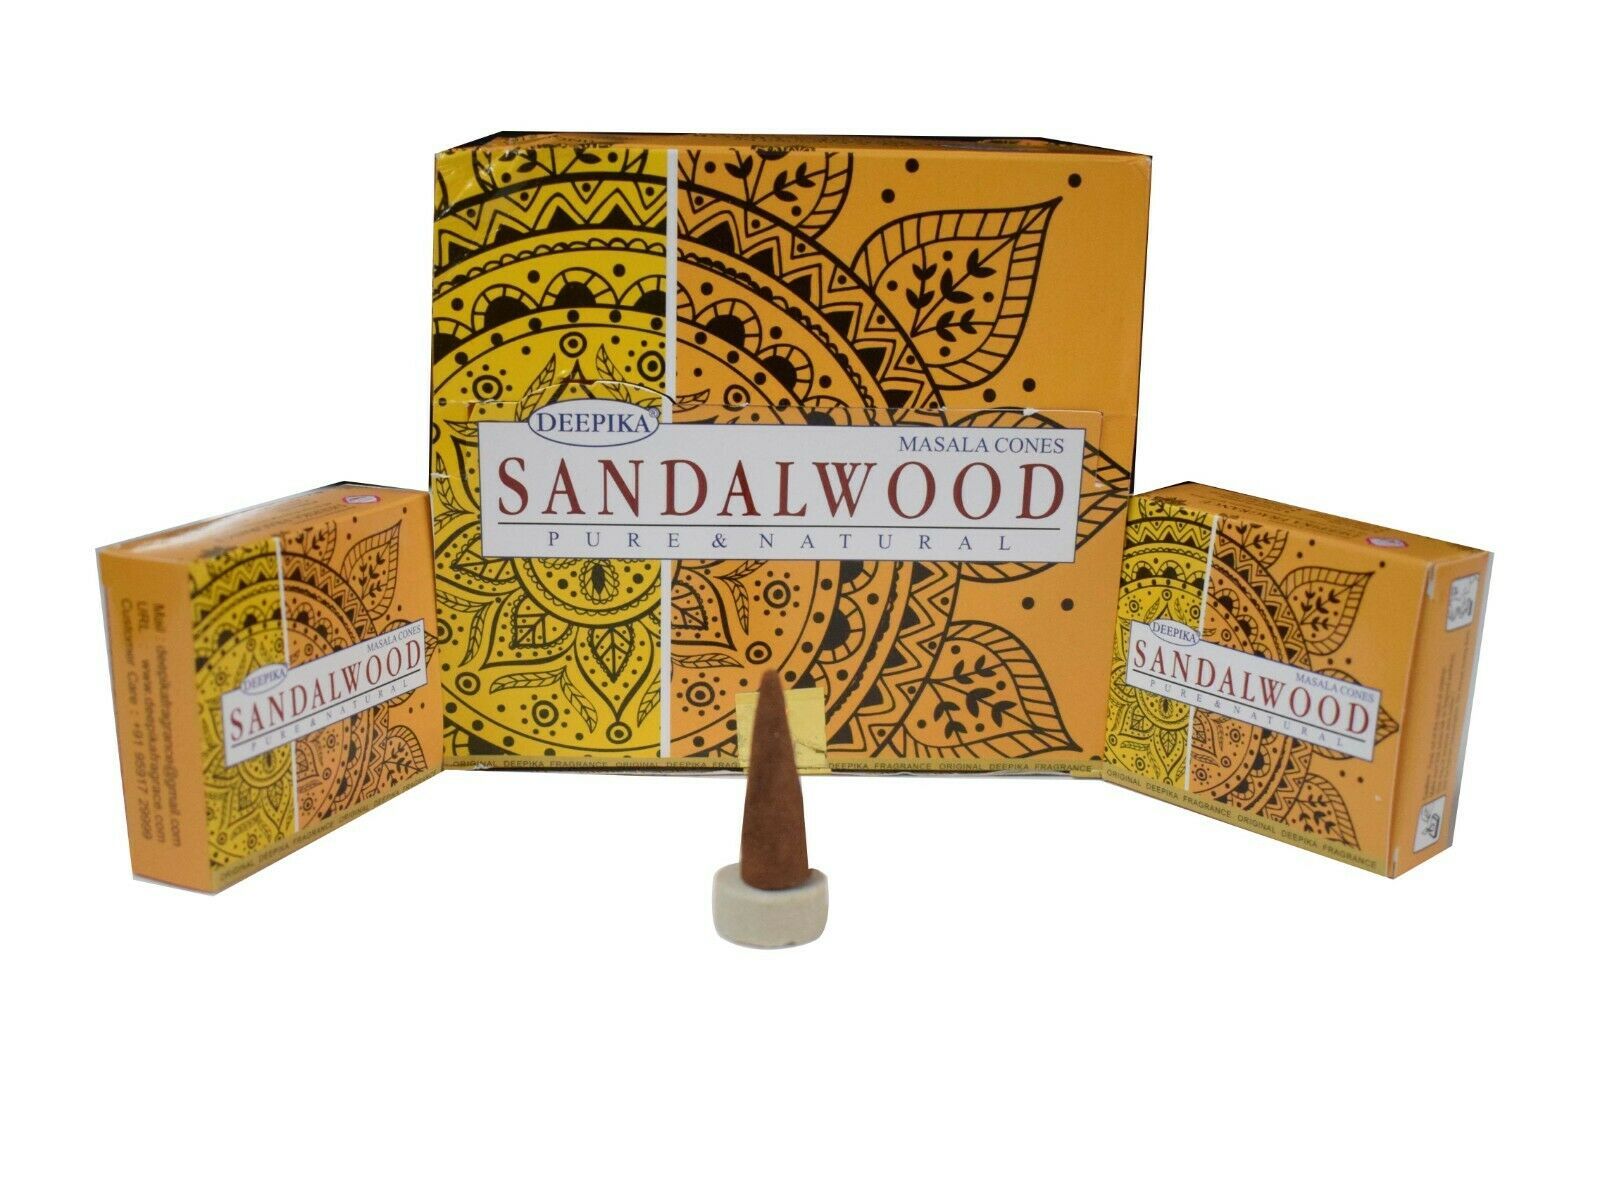 Deepika Sandalwood Natural Dhoop Cone - Pack of 12 Pkt of 10 Cones Each